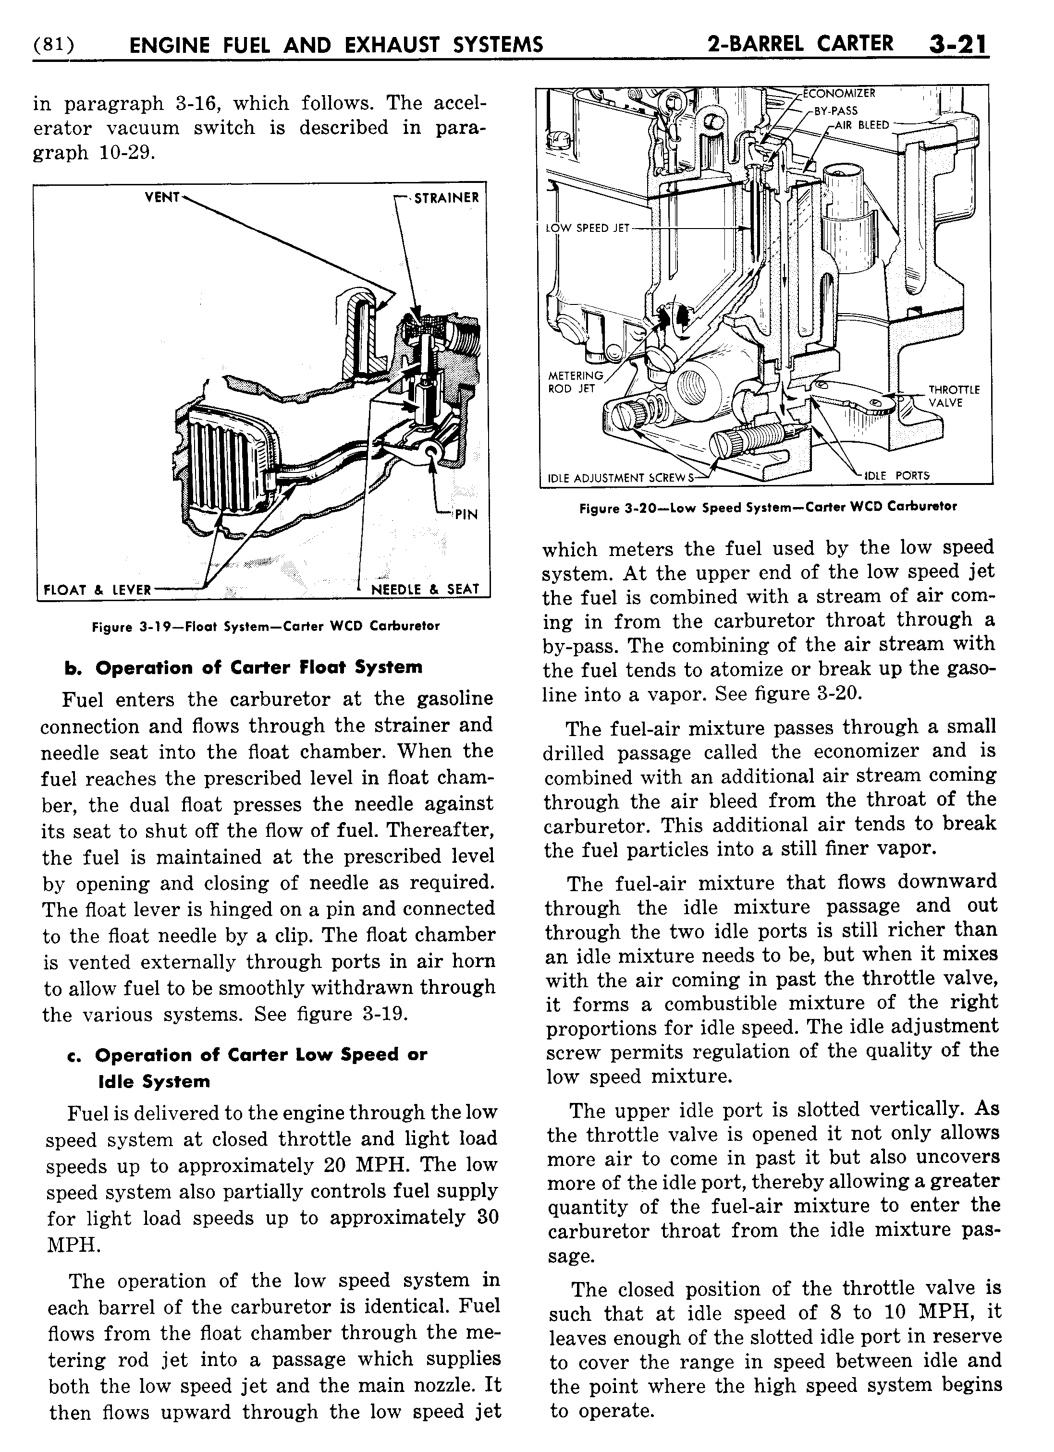 n_04 1954 Buick Shop Manual - Engine Fuel & Exhaust-021-021.jpg